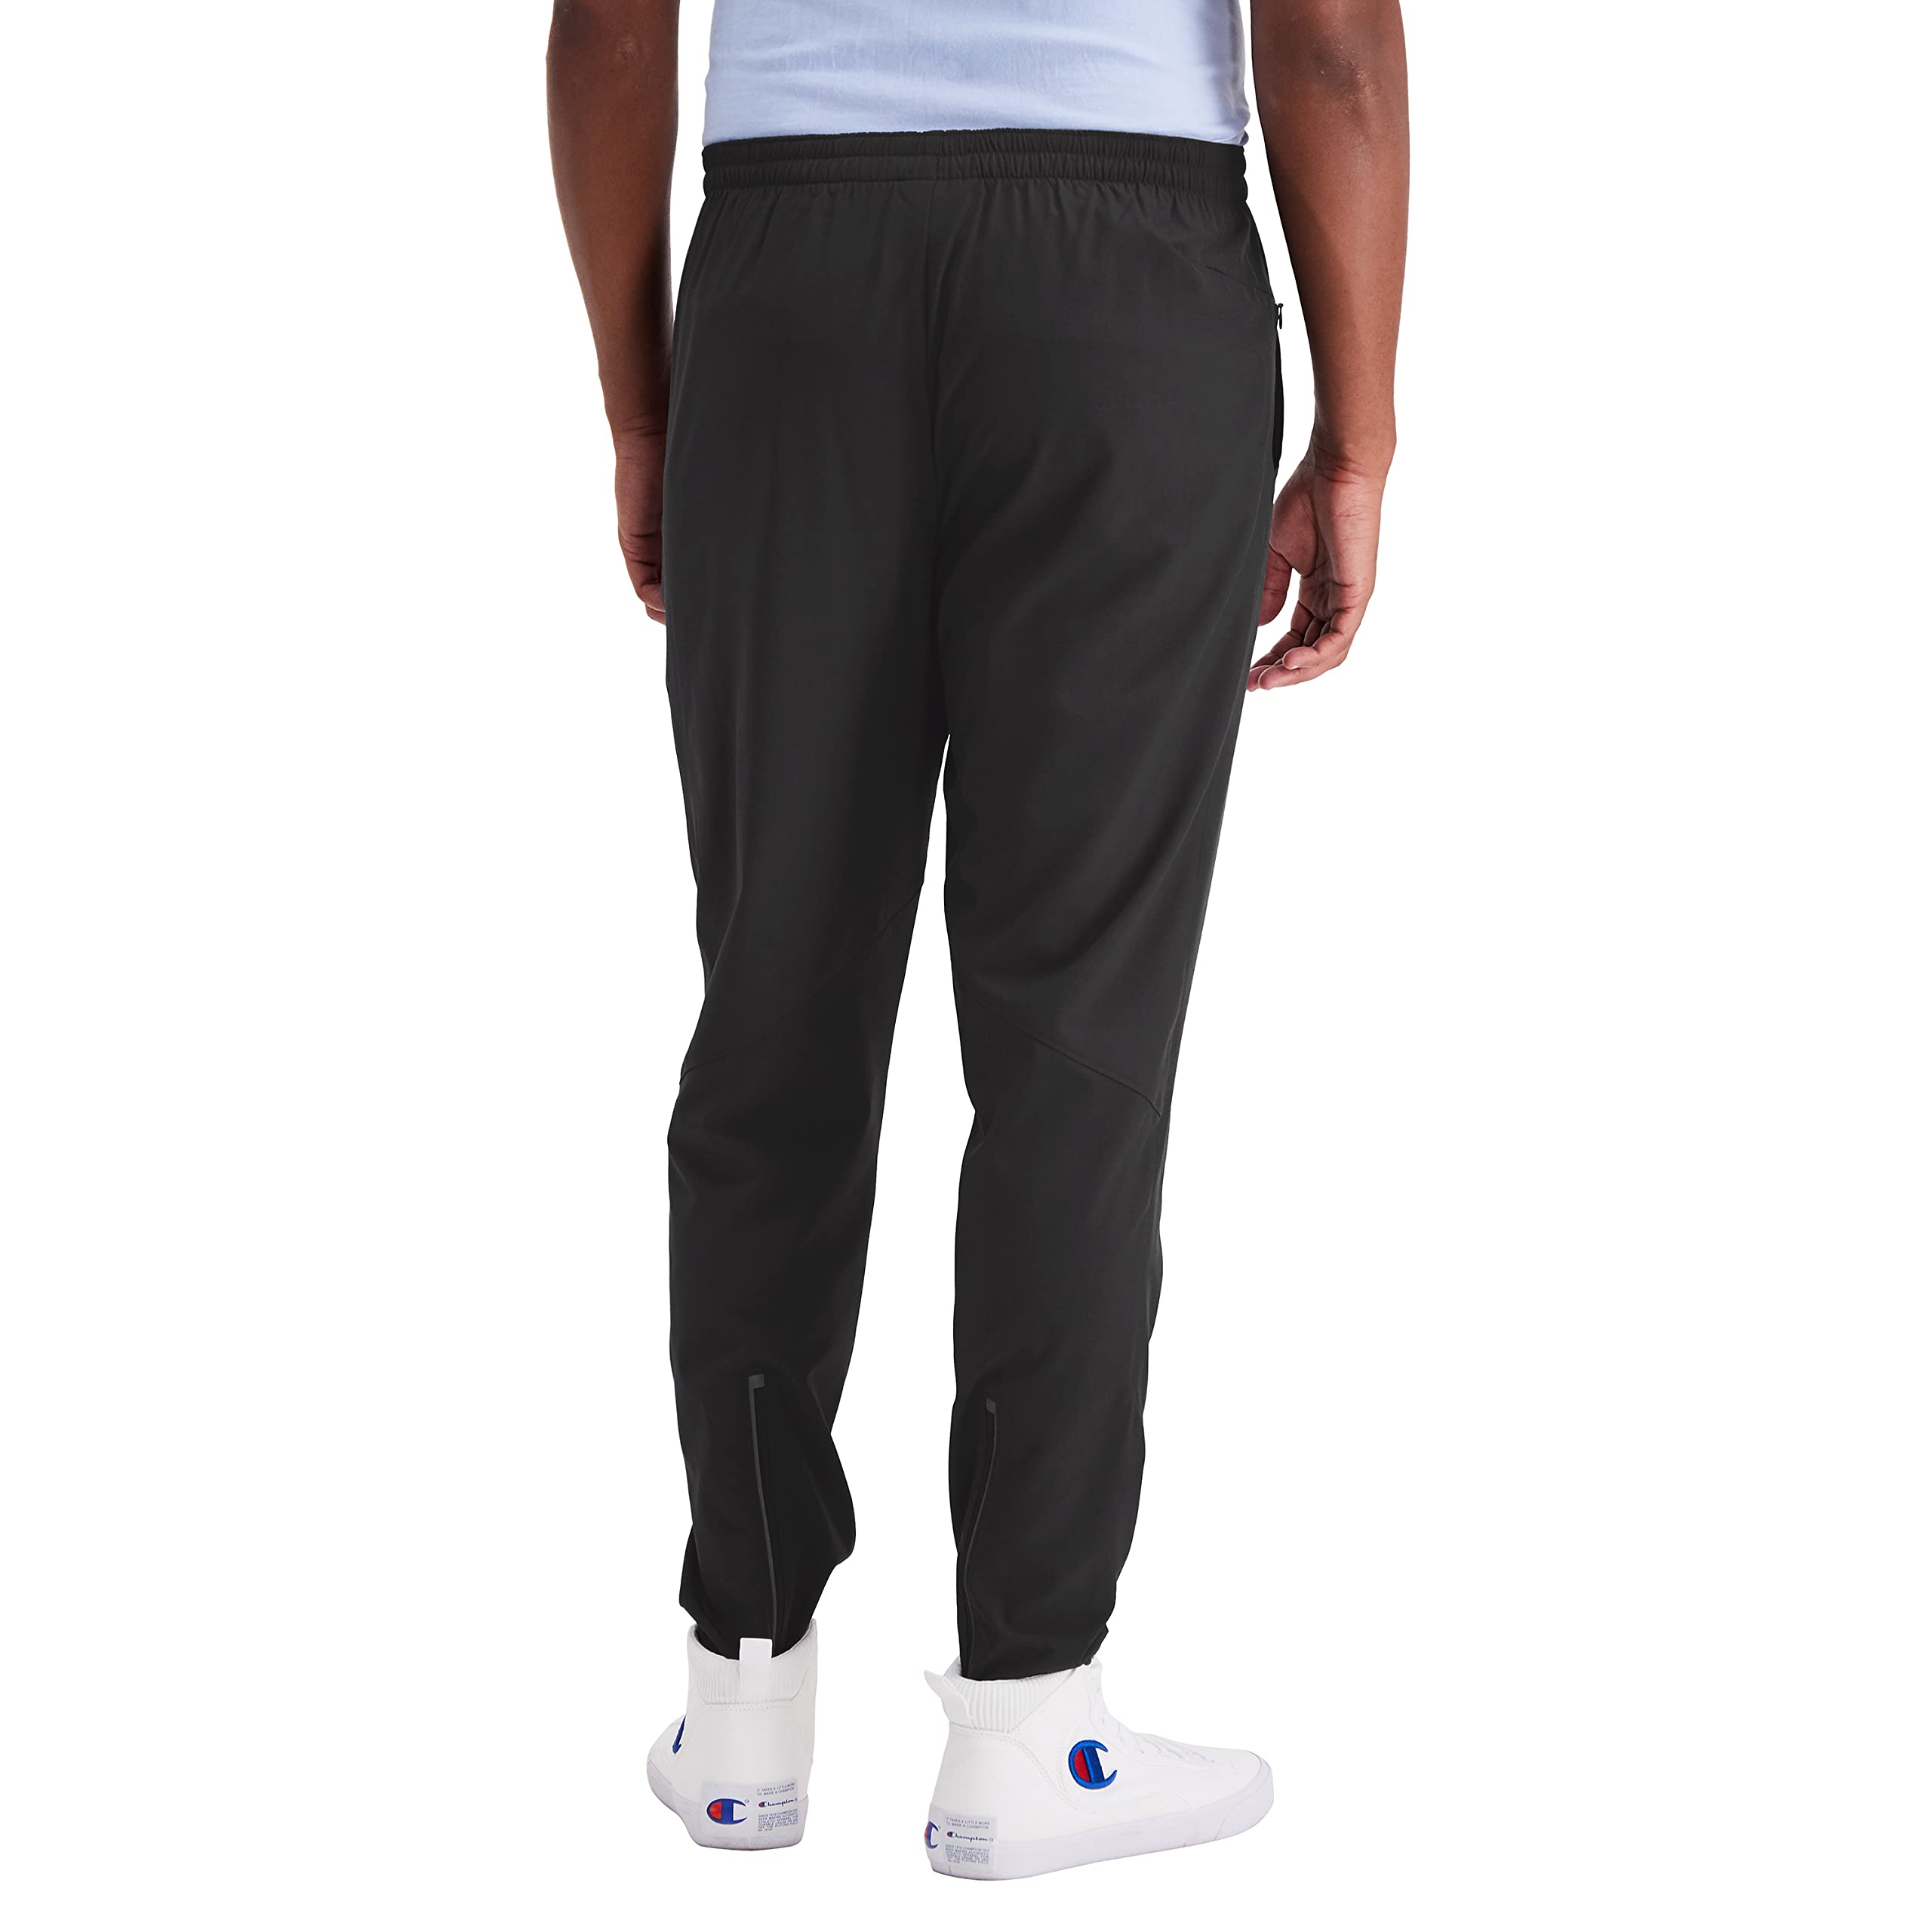 Champion Men's Sport Sweatpants, Moisture-Wicking Sport Pants, Workout Pants for Men, 30.5